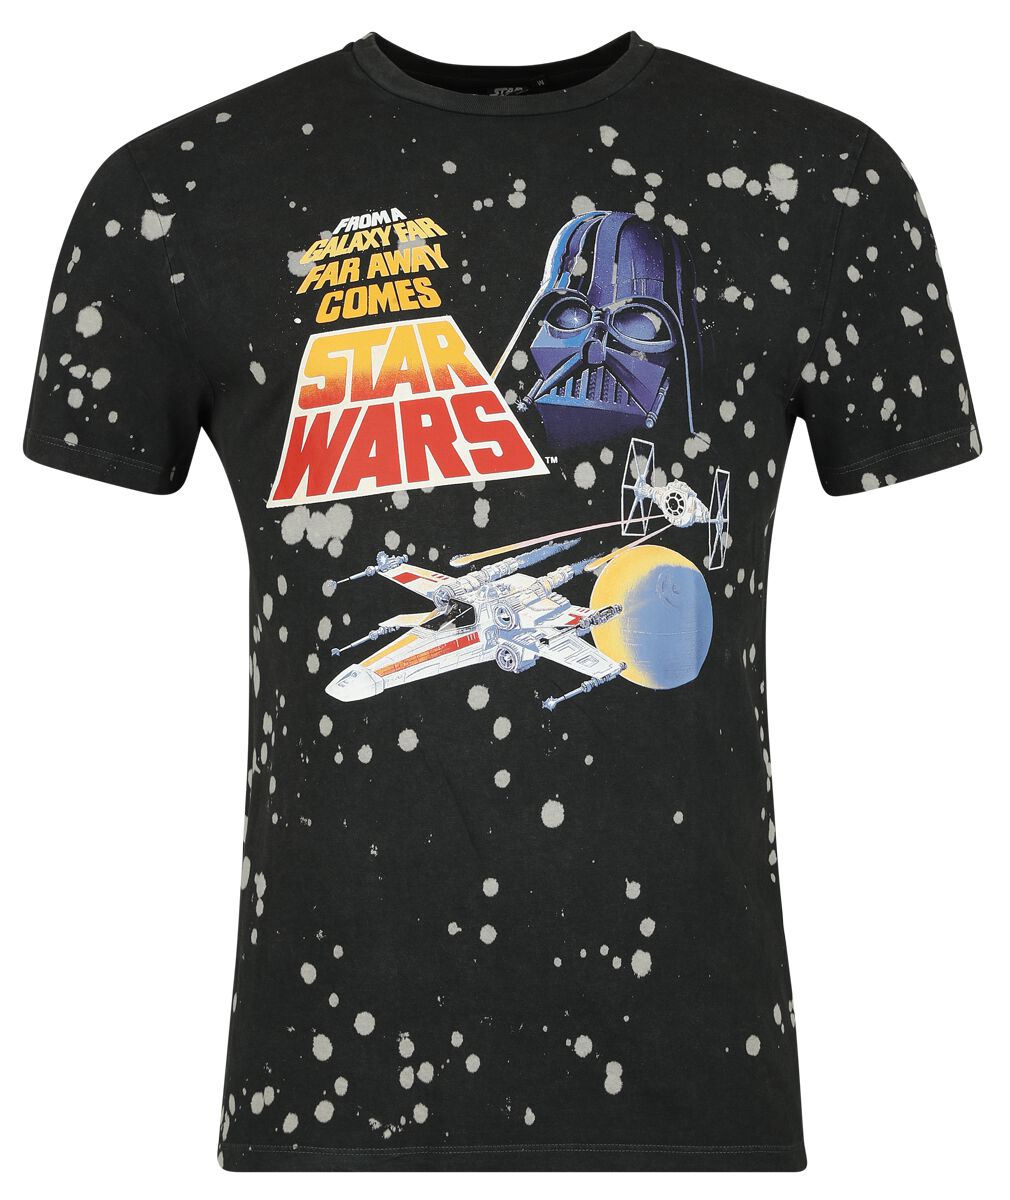 Star Wars Classic - Space T-Shirt schwarz in M